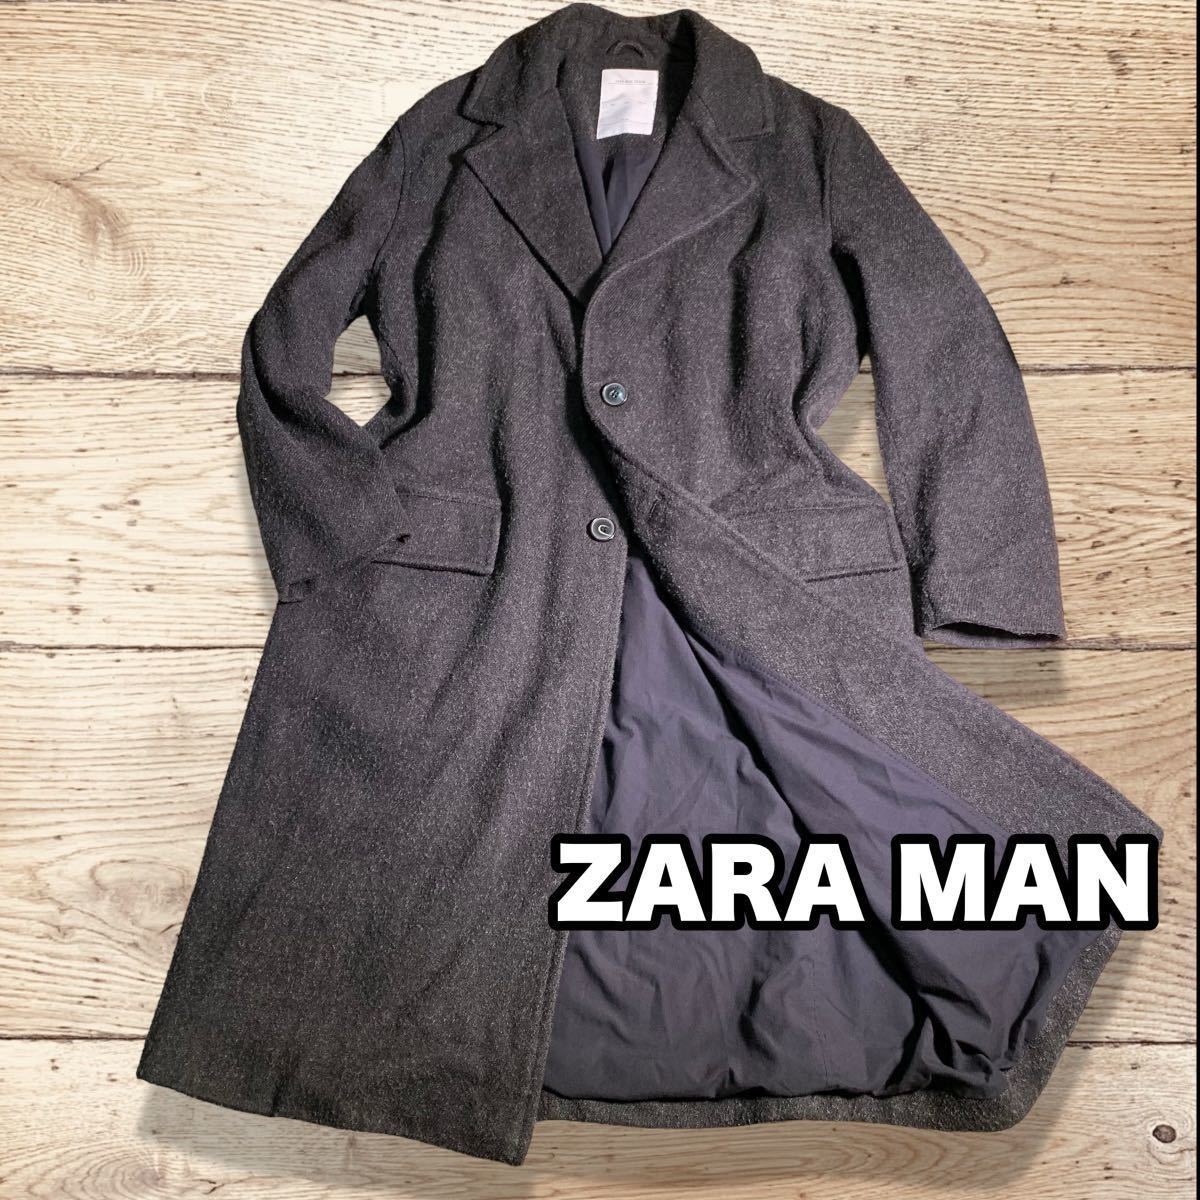 ZARA MAN ロング丈 チェスターコート メルトンウール ネップ素材 Lサイズ 厚手